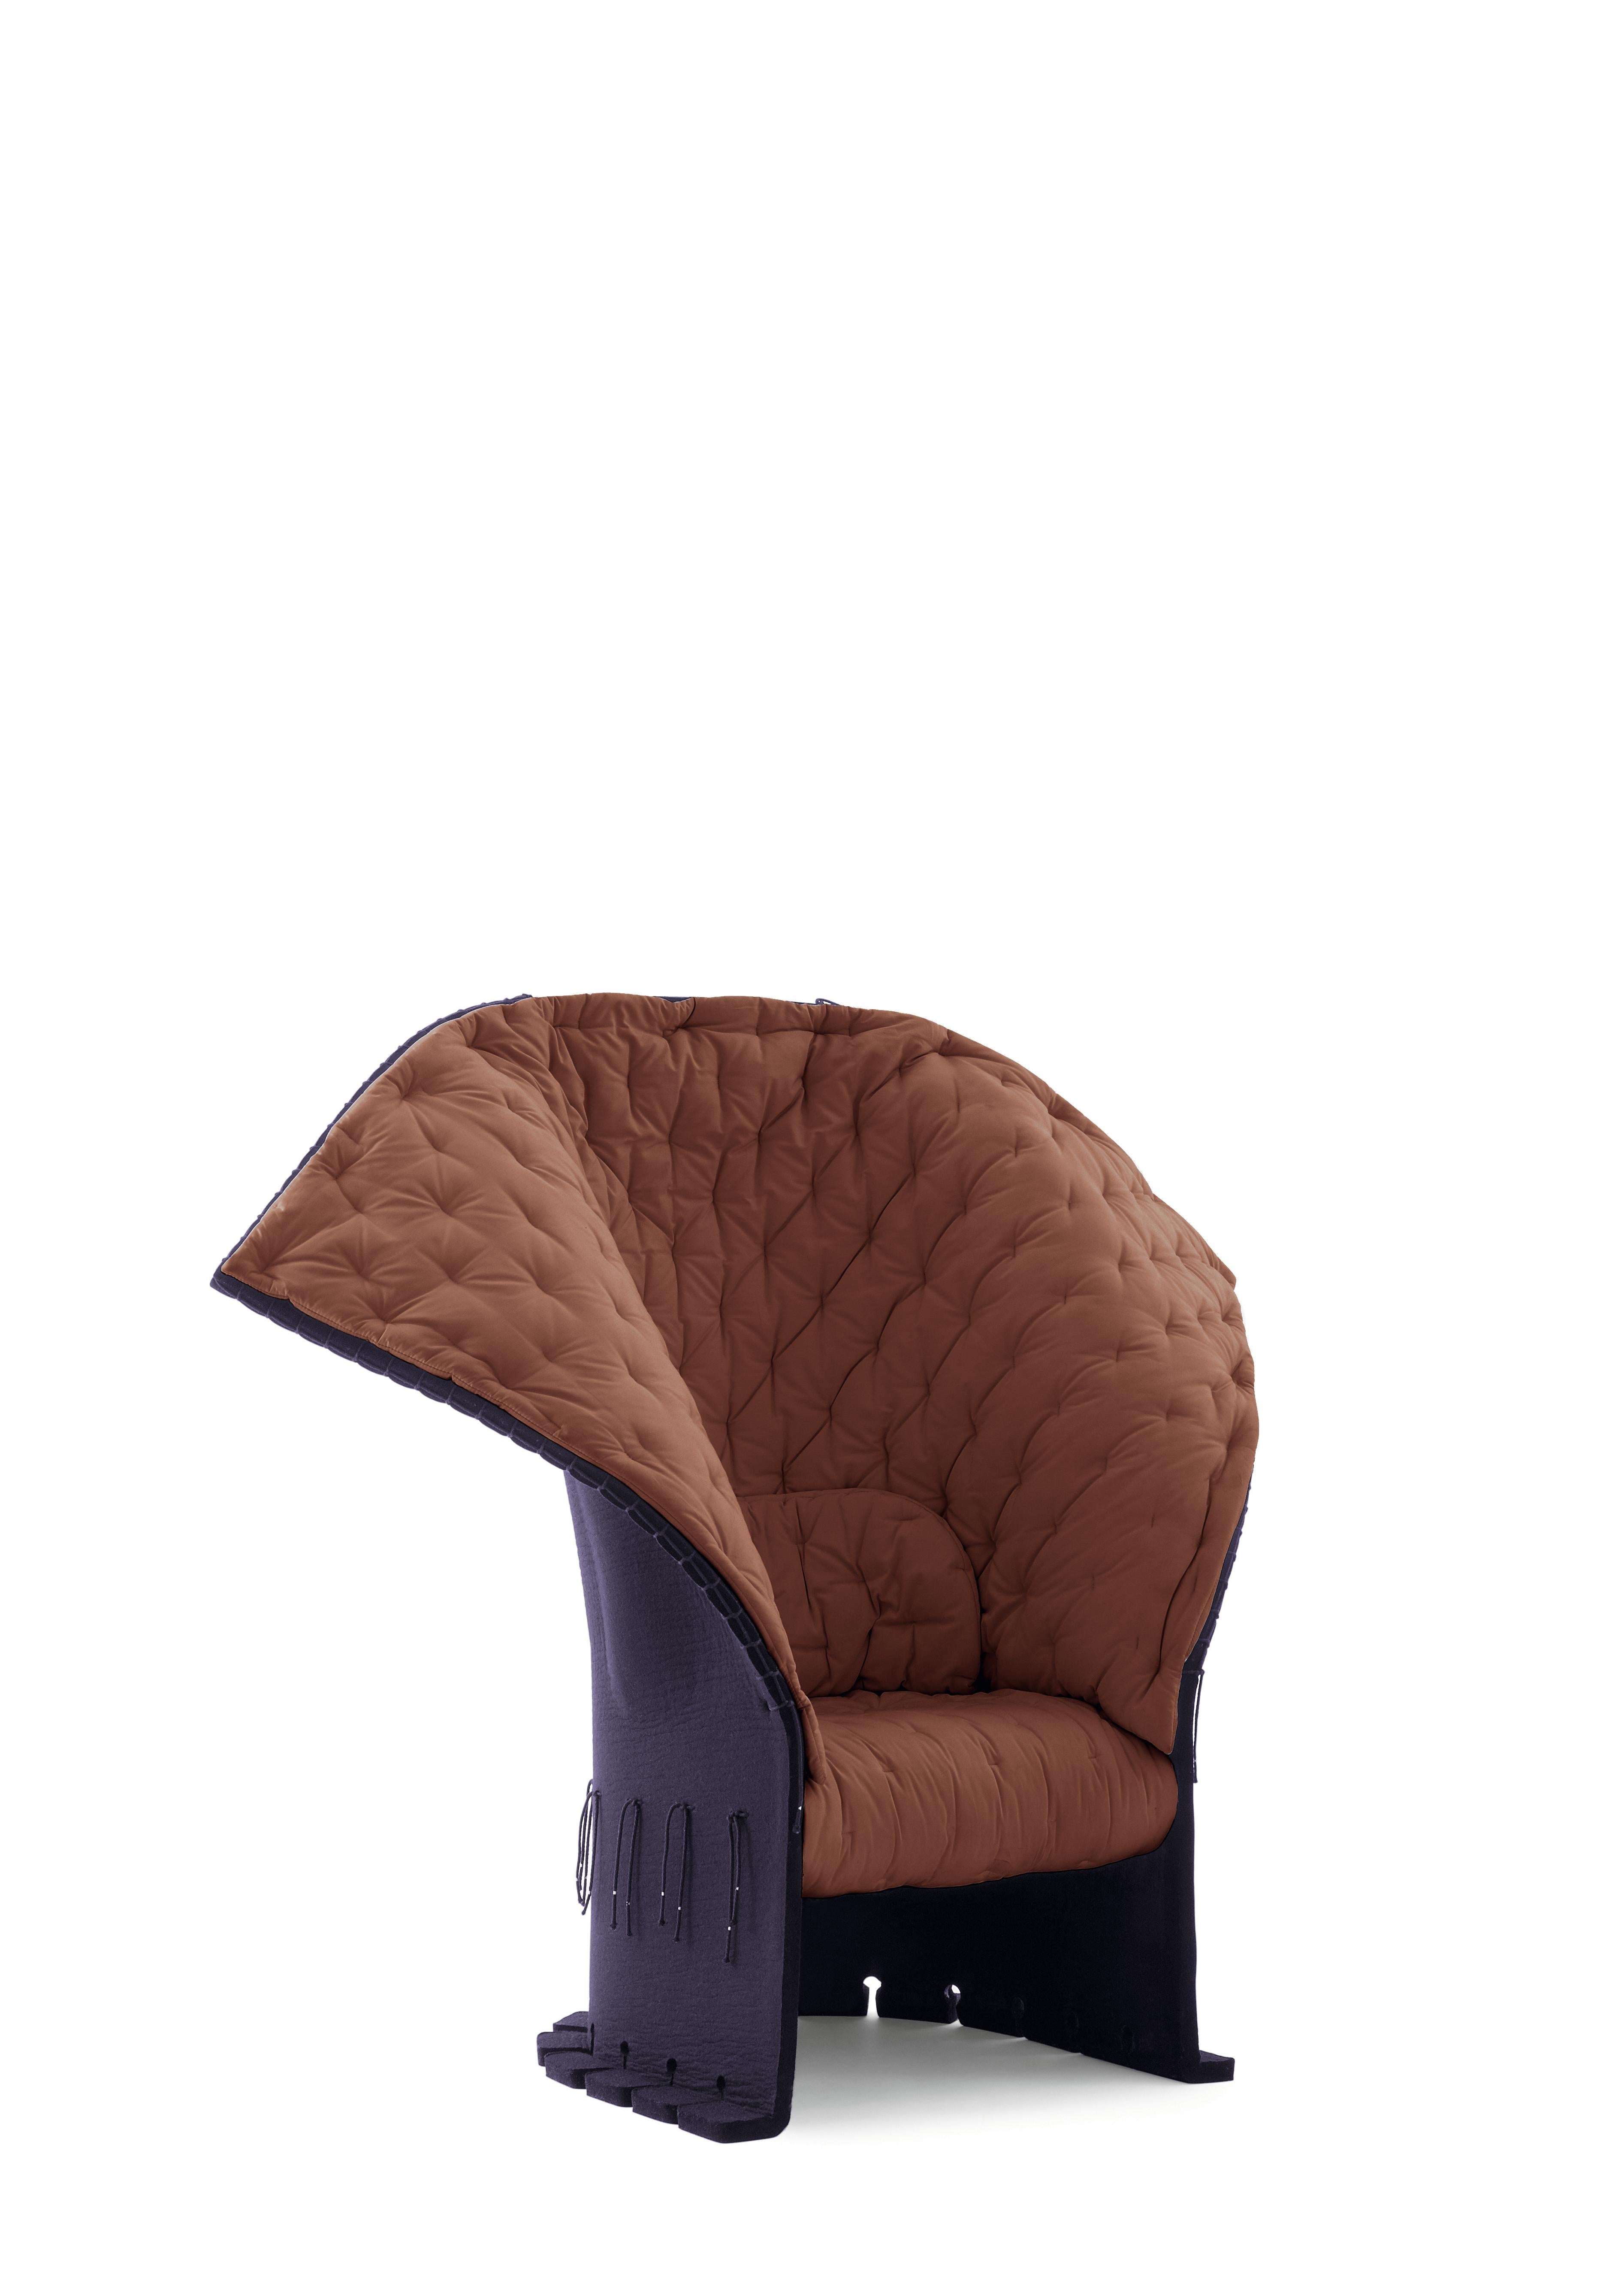 Wool Gaetano Pesce Feltri Armchair by Cassina For Sale